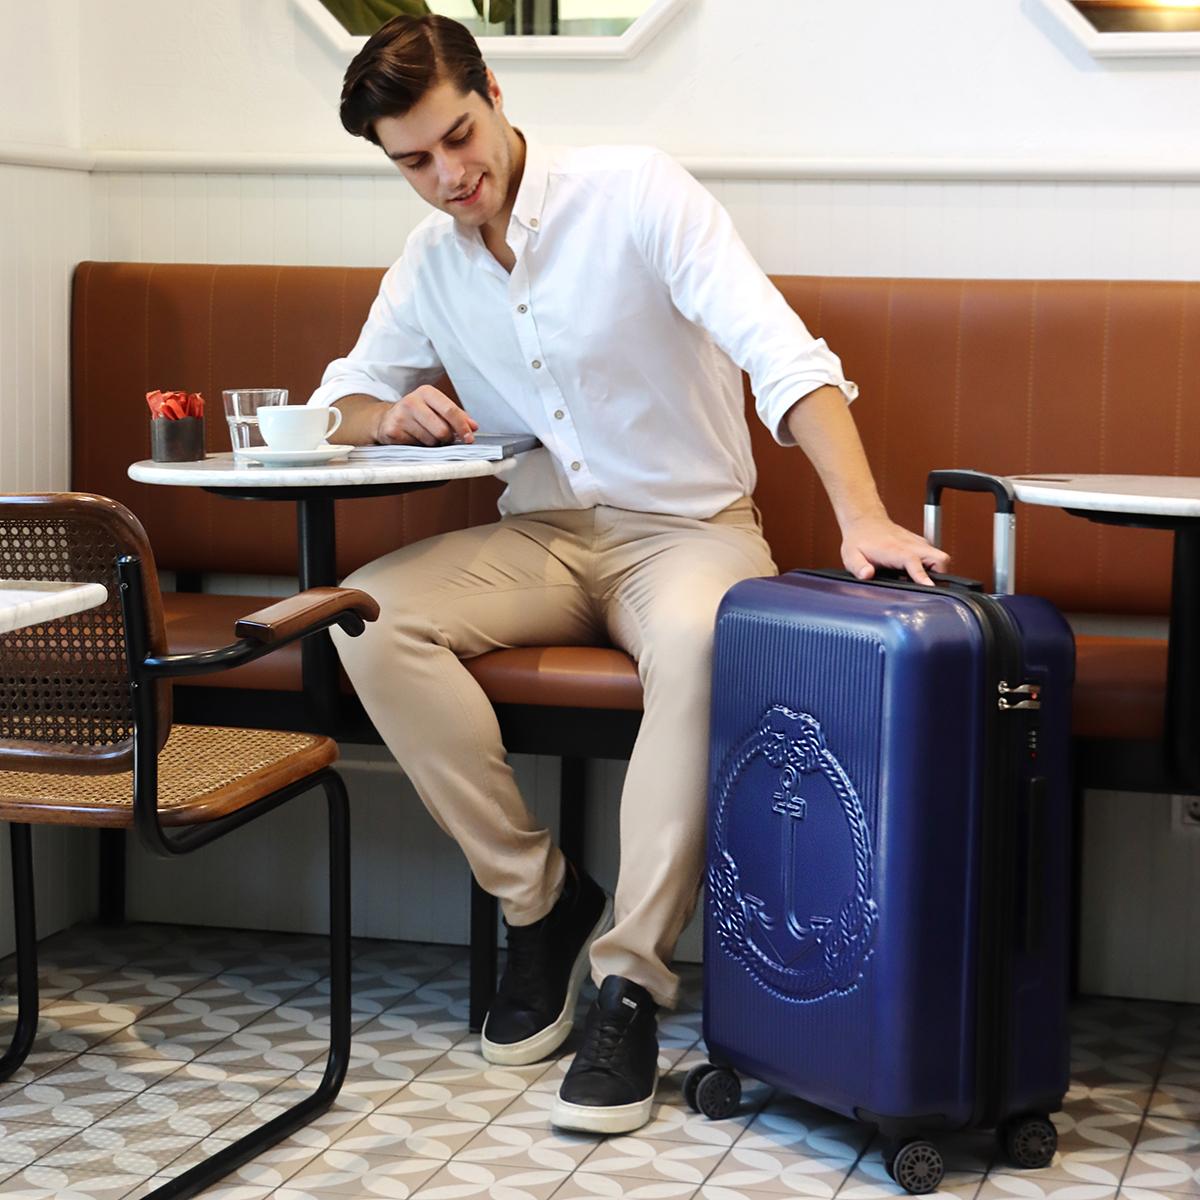 Biggdesign Ocean Suitcase Luggage, Hardshell Luggage with Spinner Wheel, Travel Suitcase, Lock System, Lightweight, Blue, Large, 24 Inch